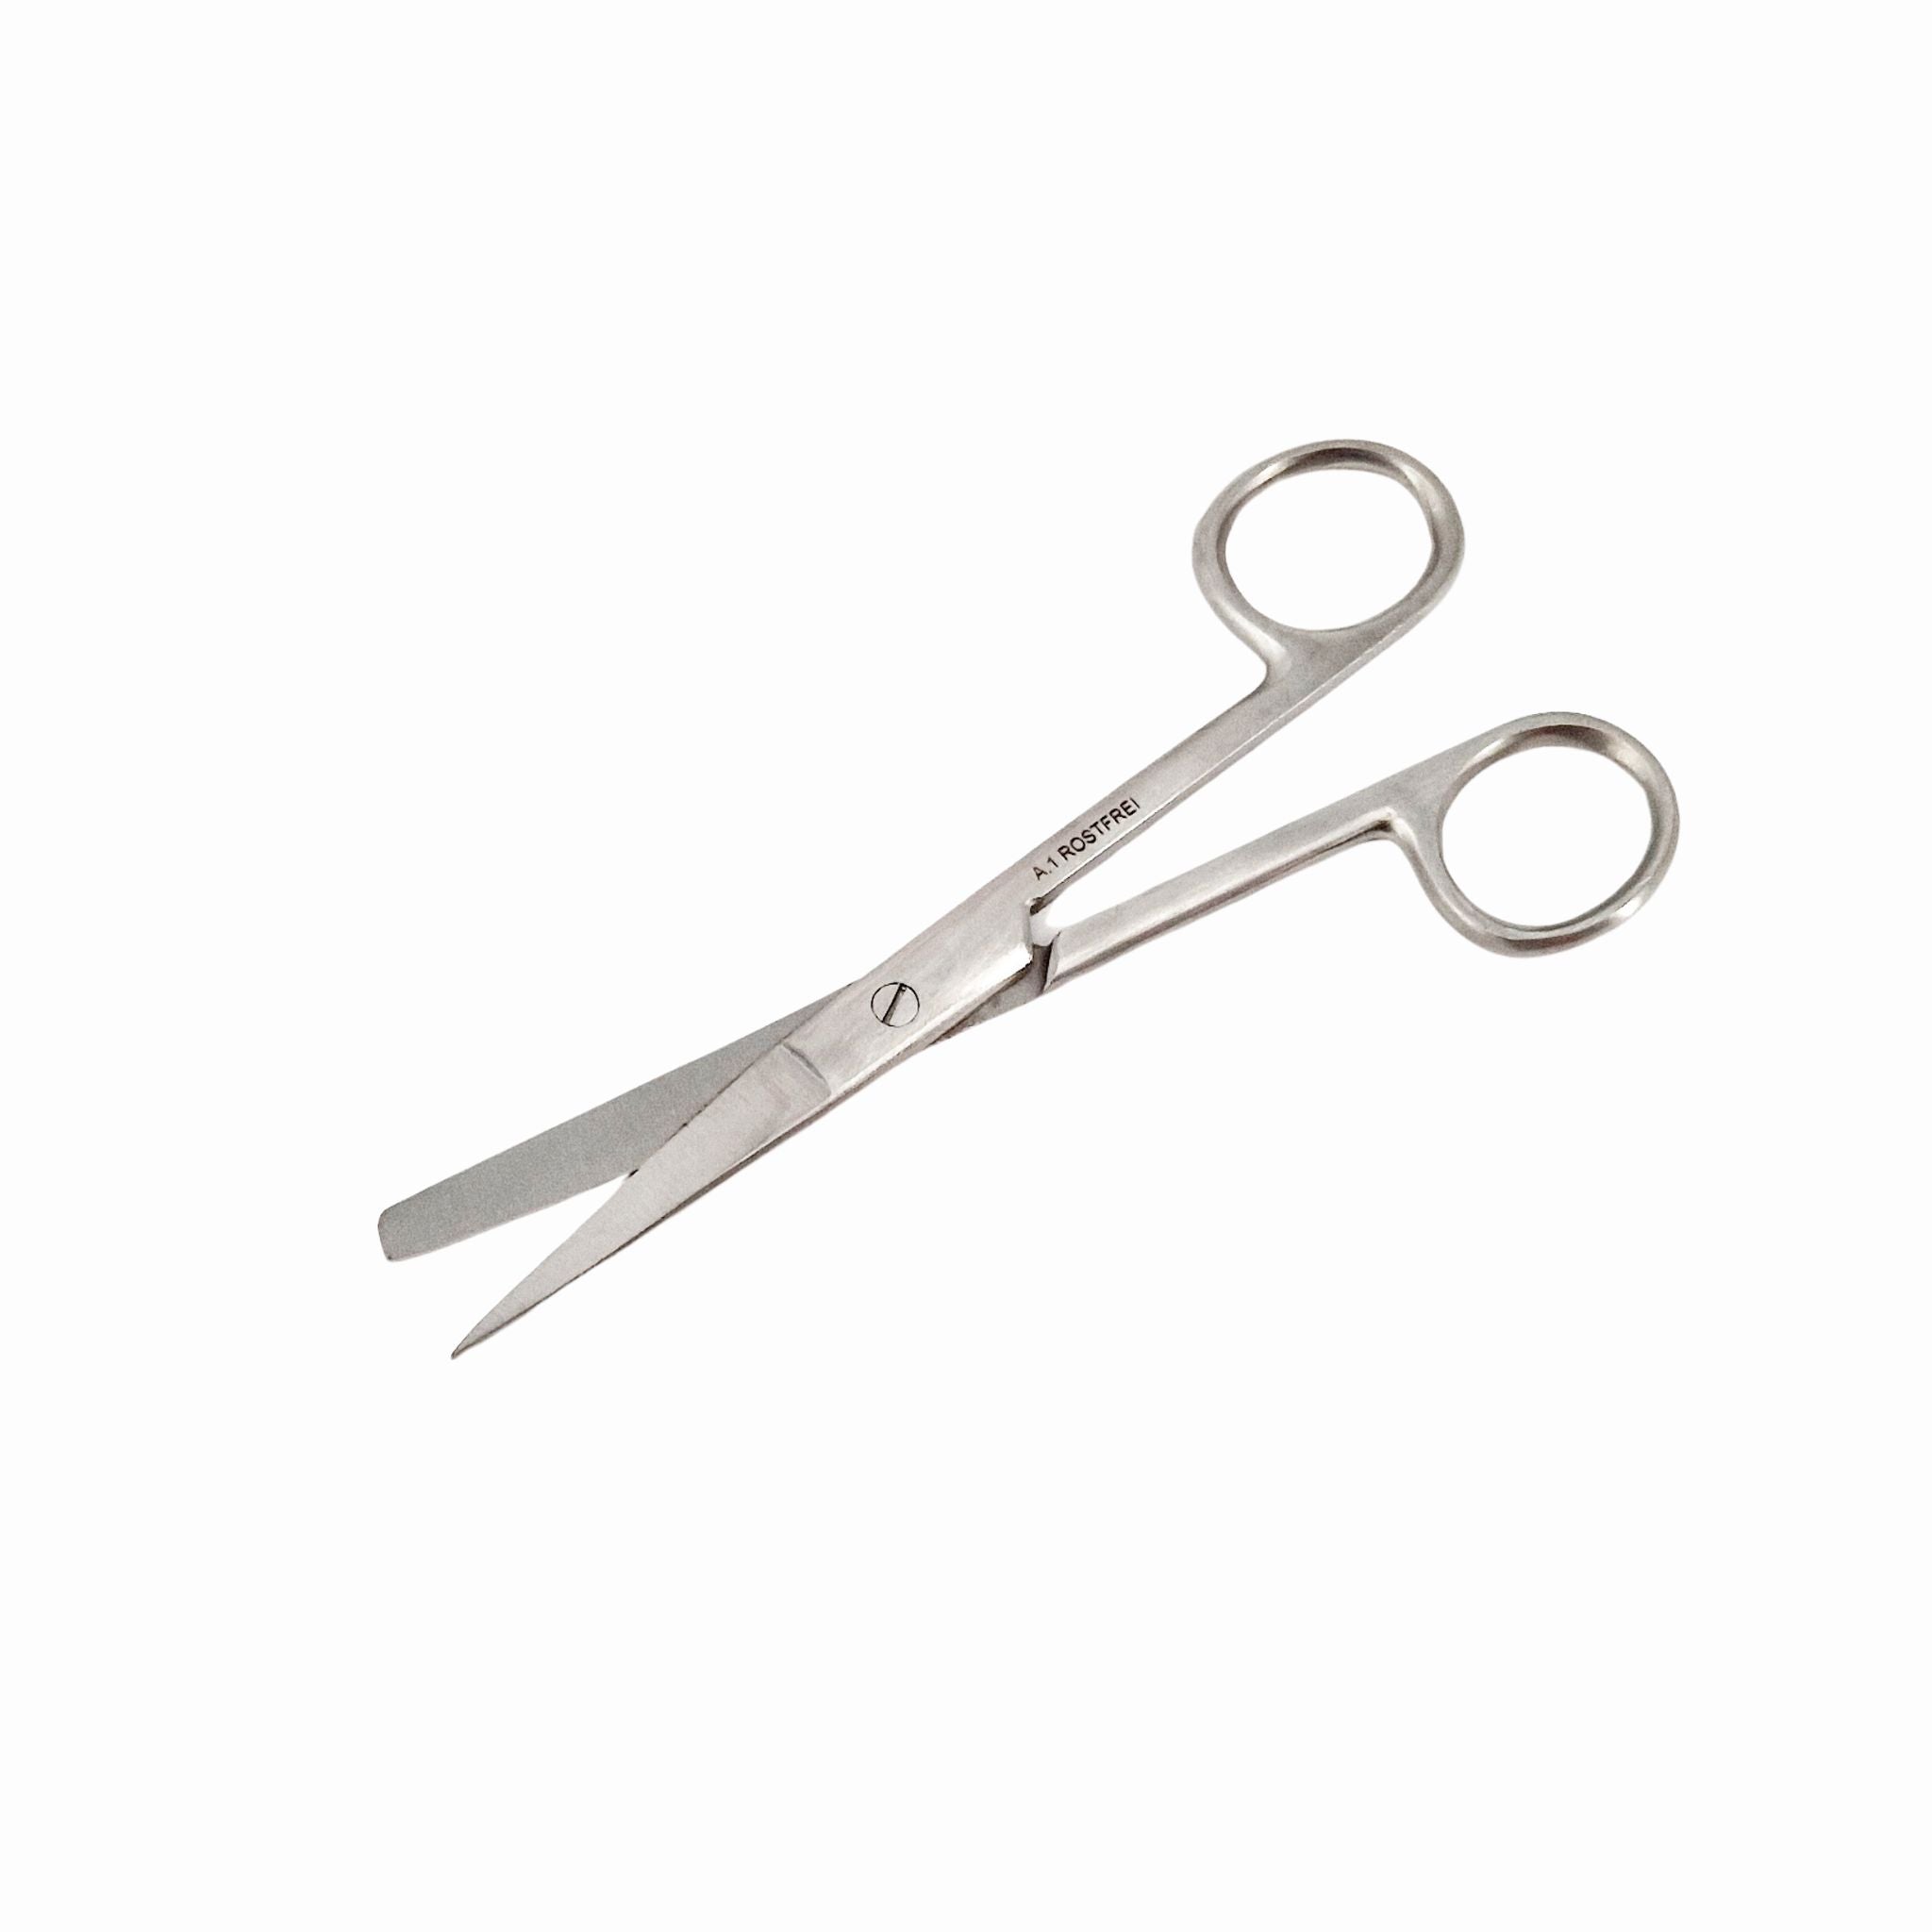 Lavabis scissors straight stainless steel - 0